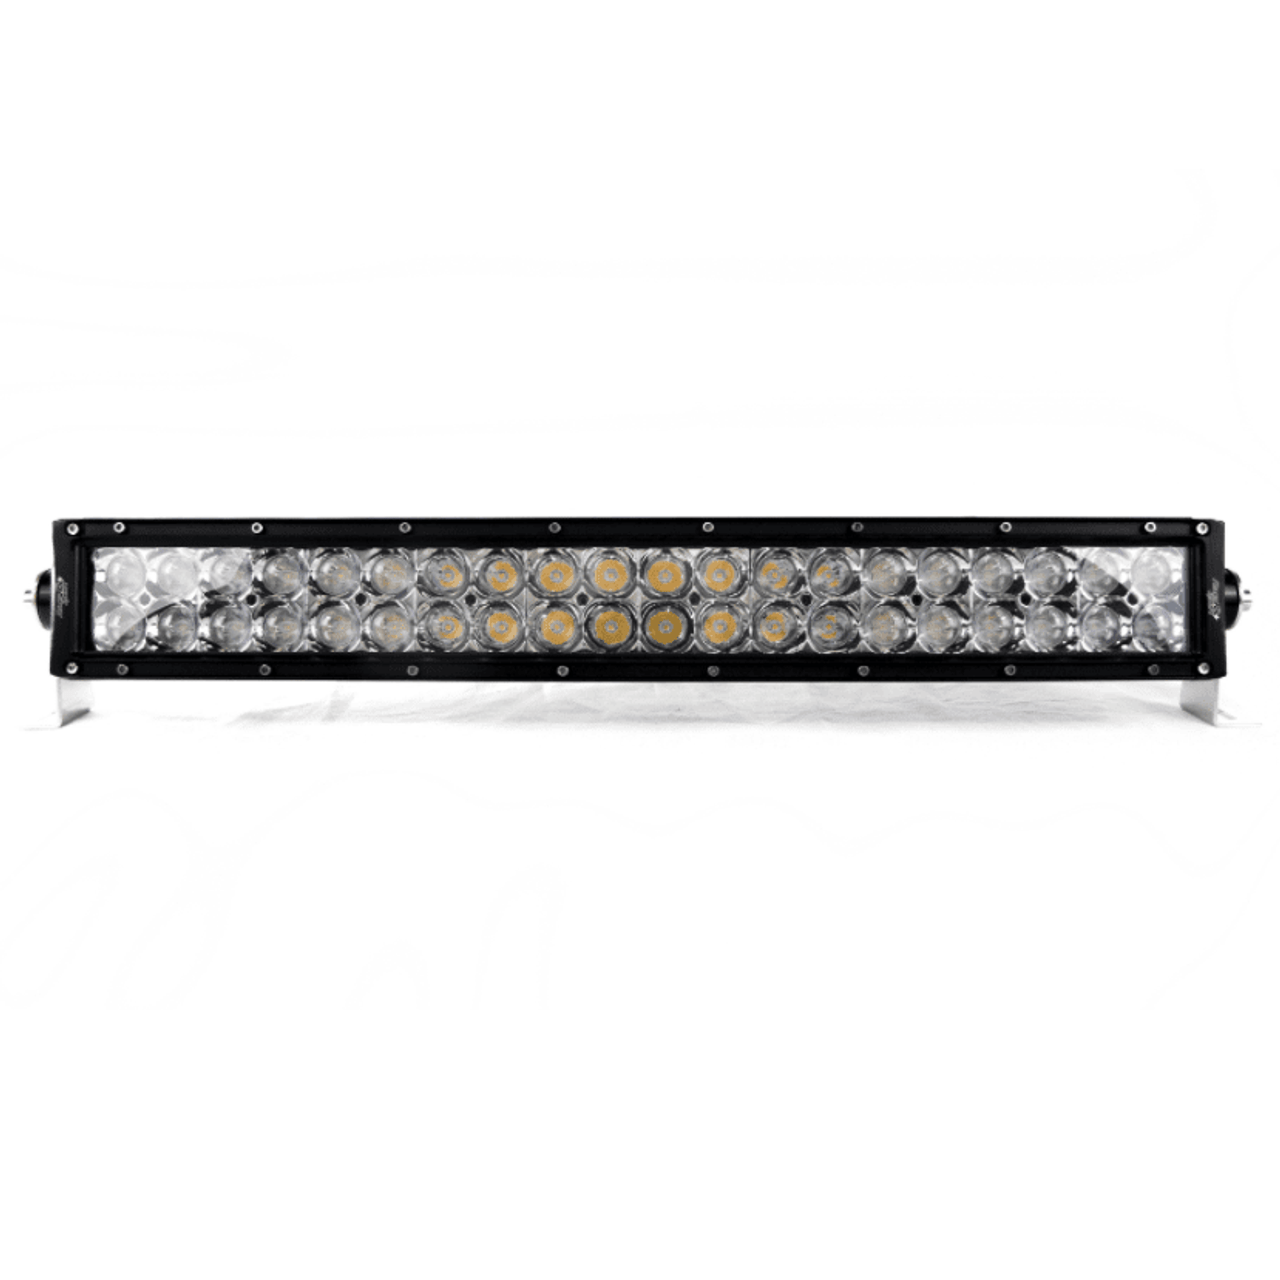 UTV Side X Side 21.5 Inch ECO-Light Series Double Row LED Light Bar